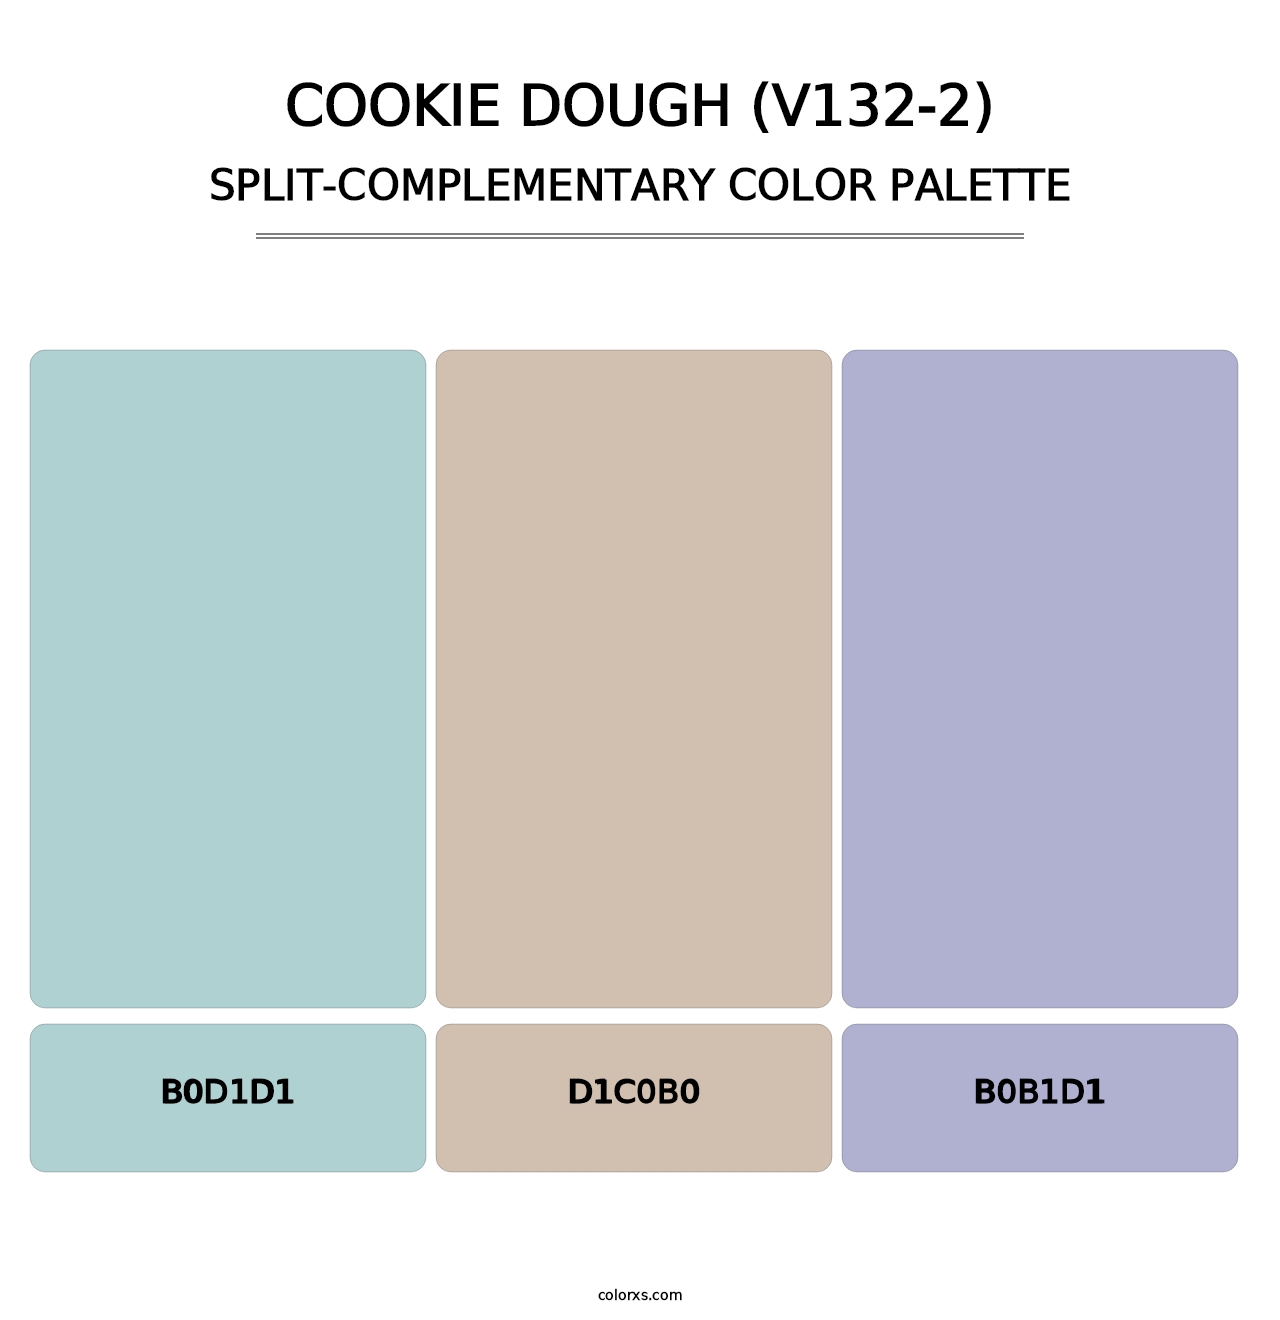 Cookie Dough (V132-2) - Split-Complementary Color Palette